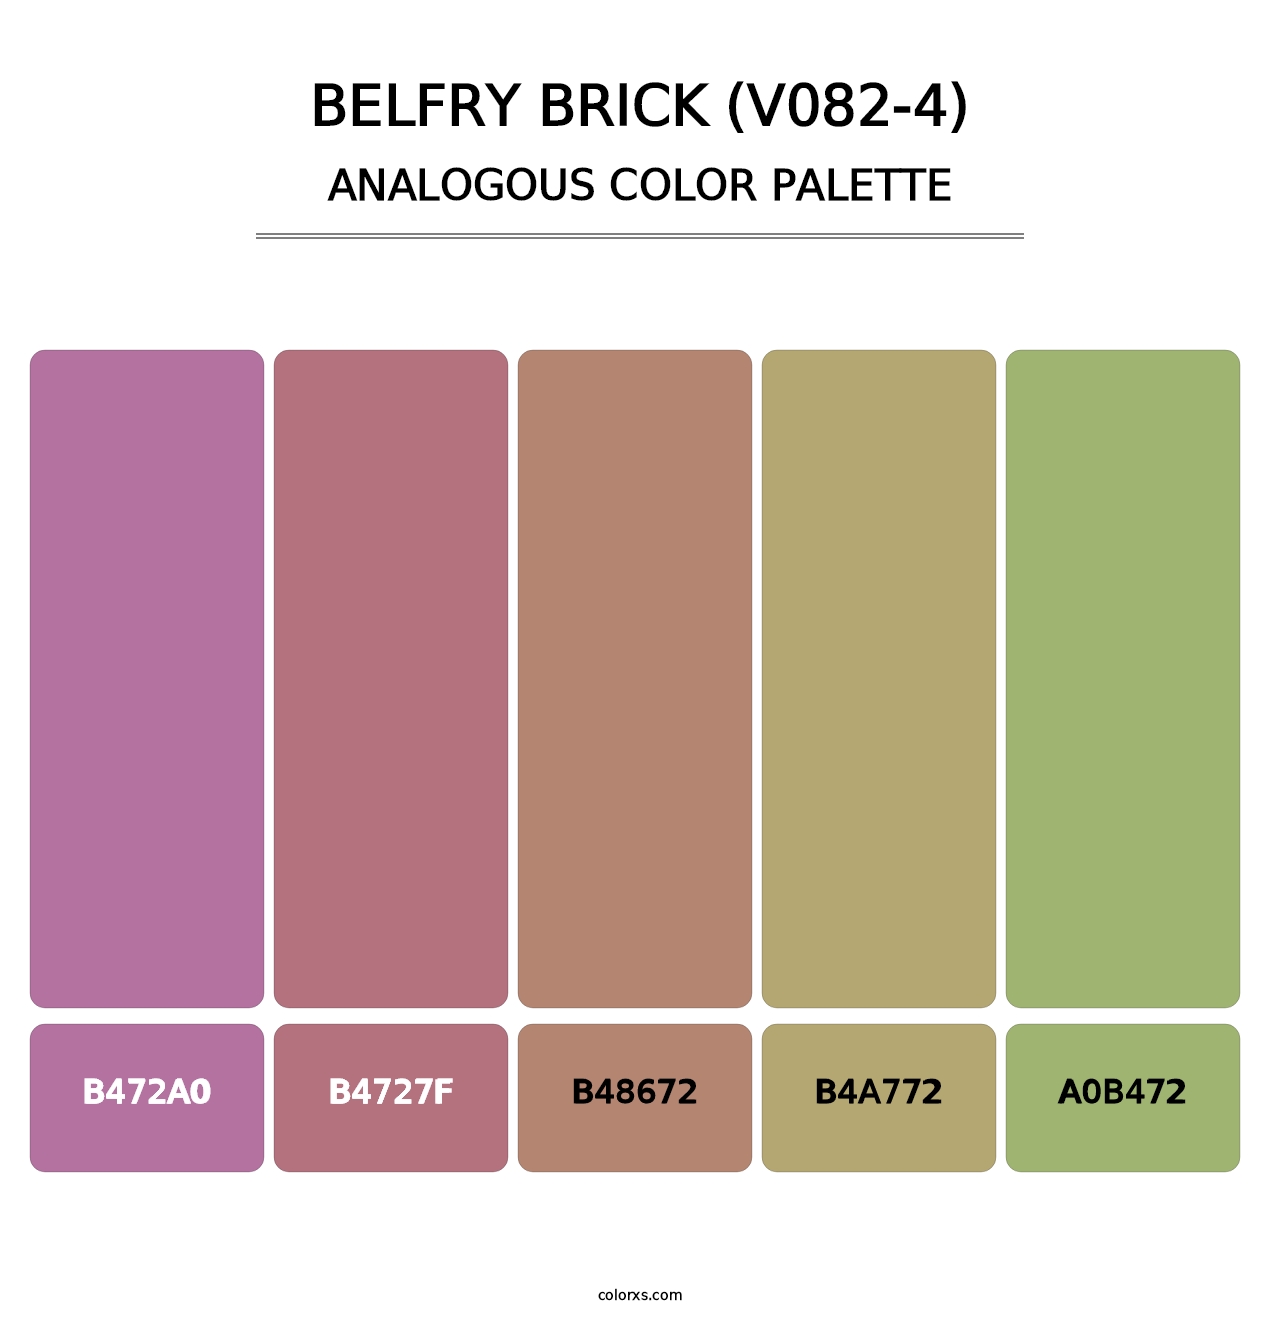 Belfry Brick (V082-4) - Analogous Color Palette